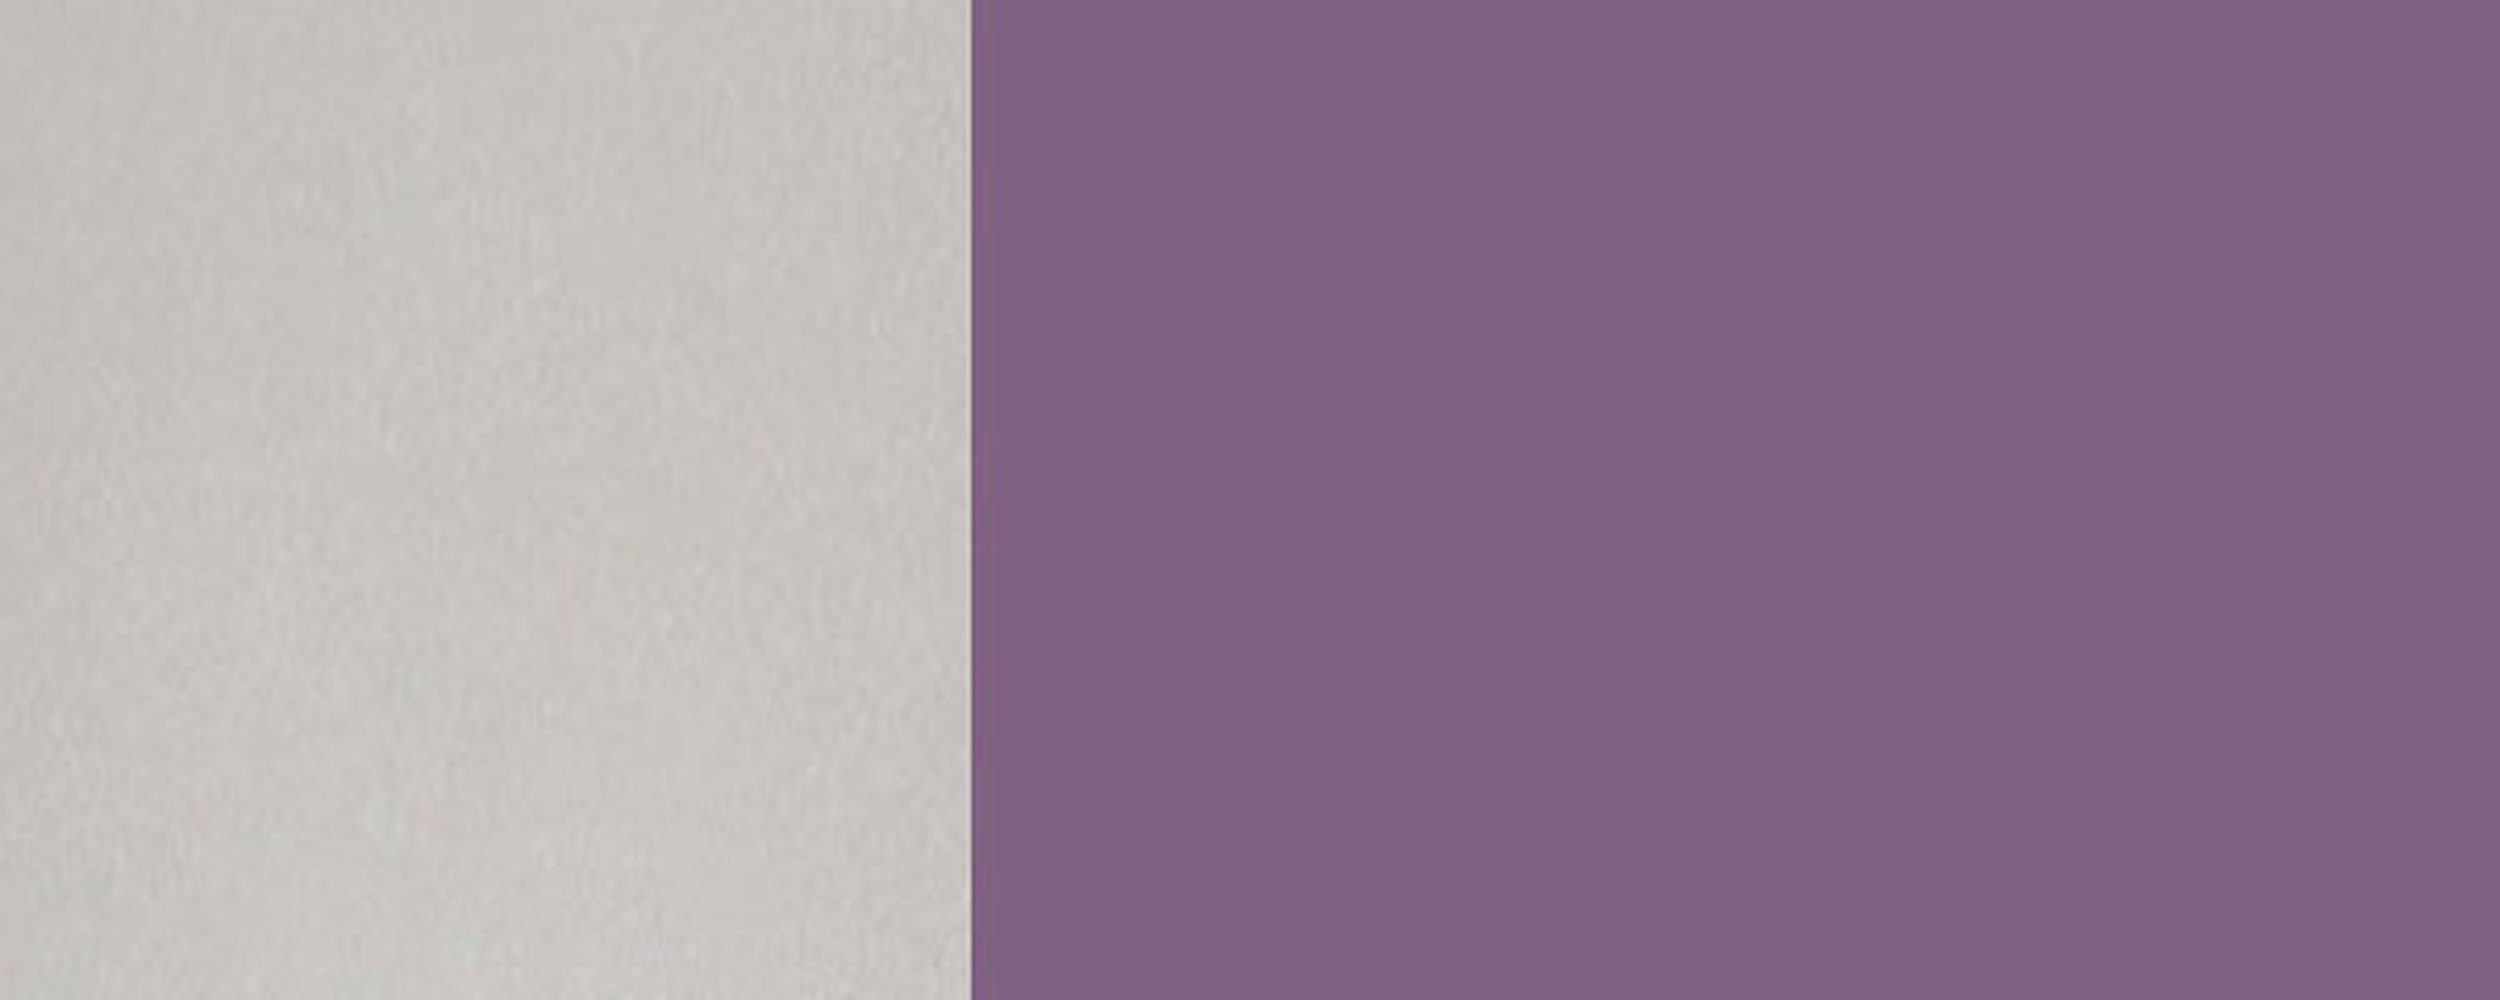 (Tivoli) rotlila 90cm Front- mit 4001 2 Korpusfarbe Tivoli Schubladen (Teilauszug) und RAL Feldmann-Wohnen wählbar Unterschrank matt